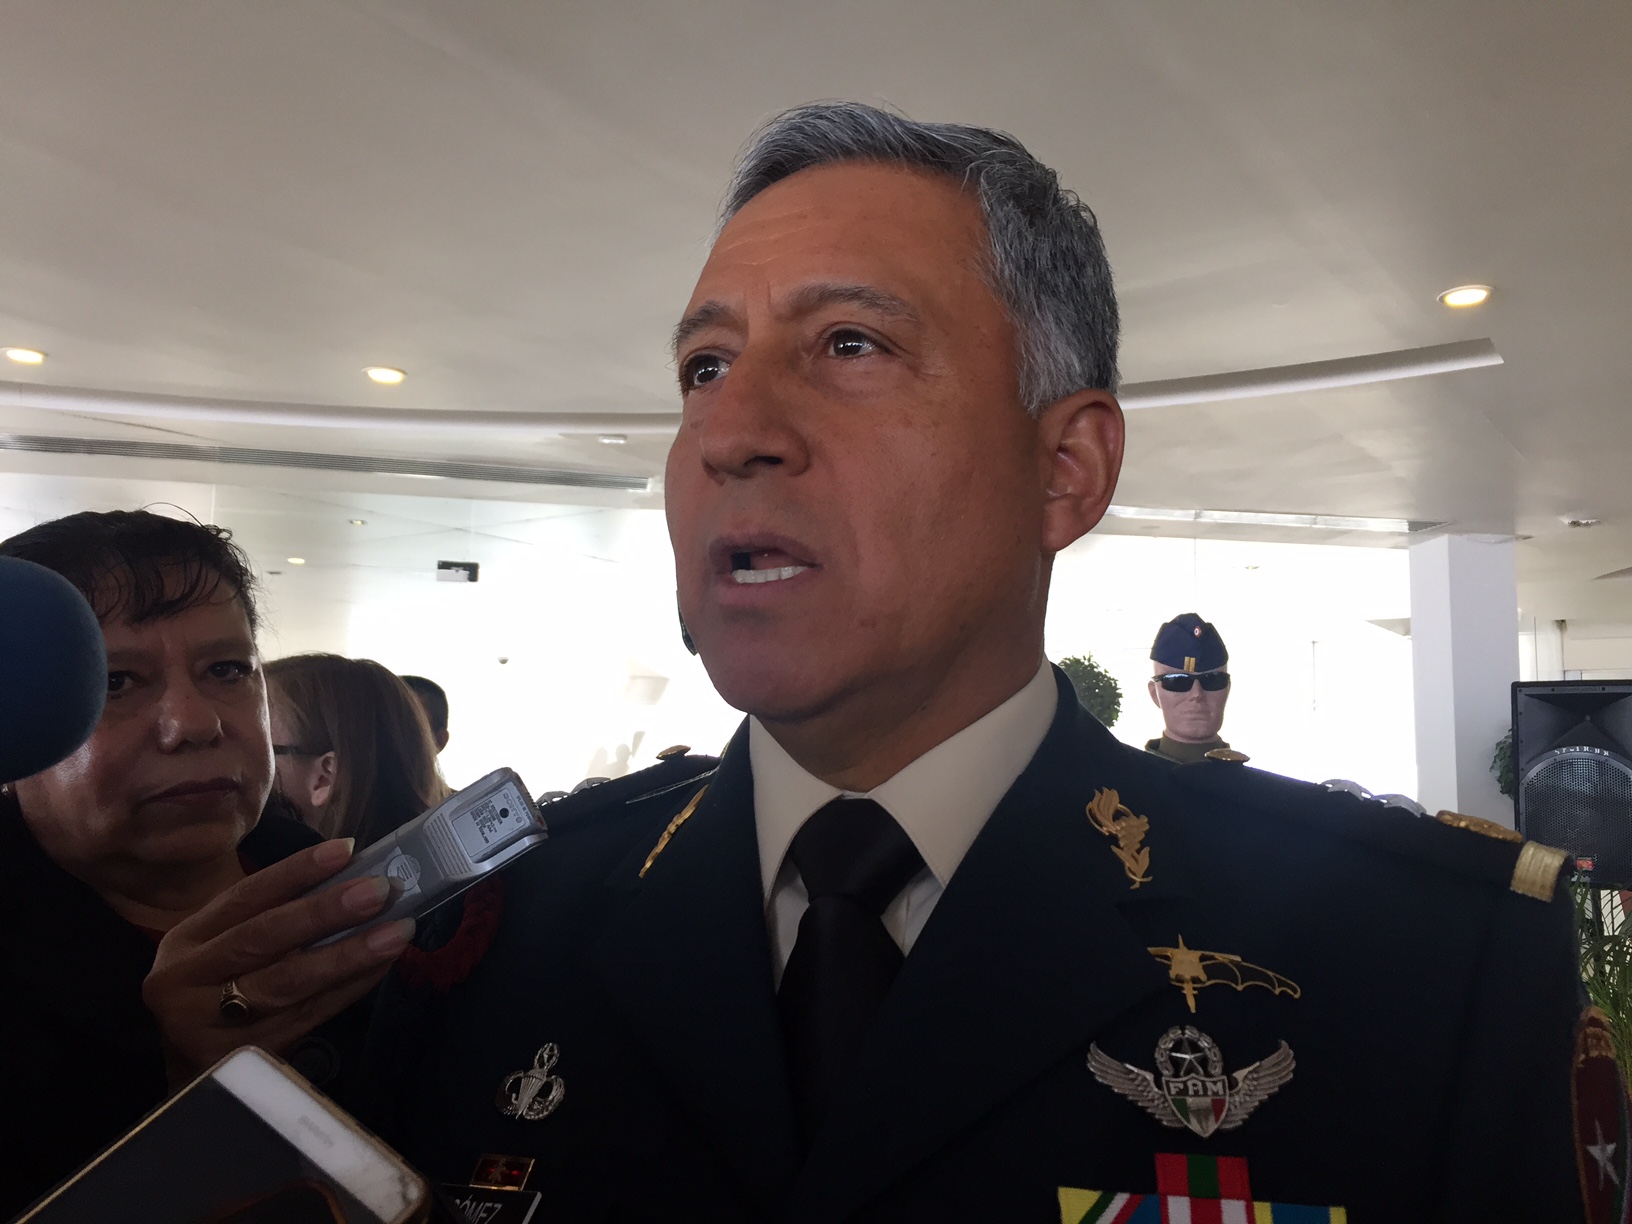  Militares han intervenido en colonias de la Zona Metropolitana de Querétaro